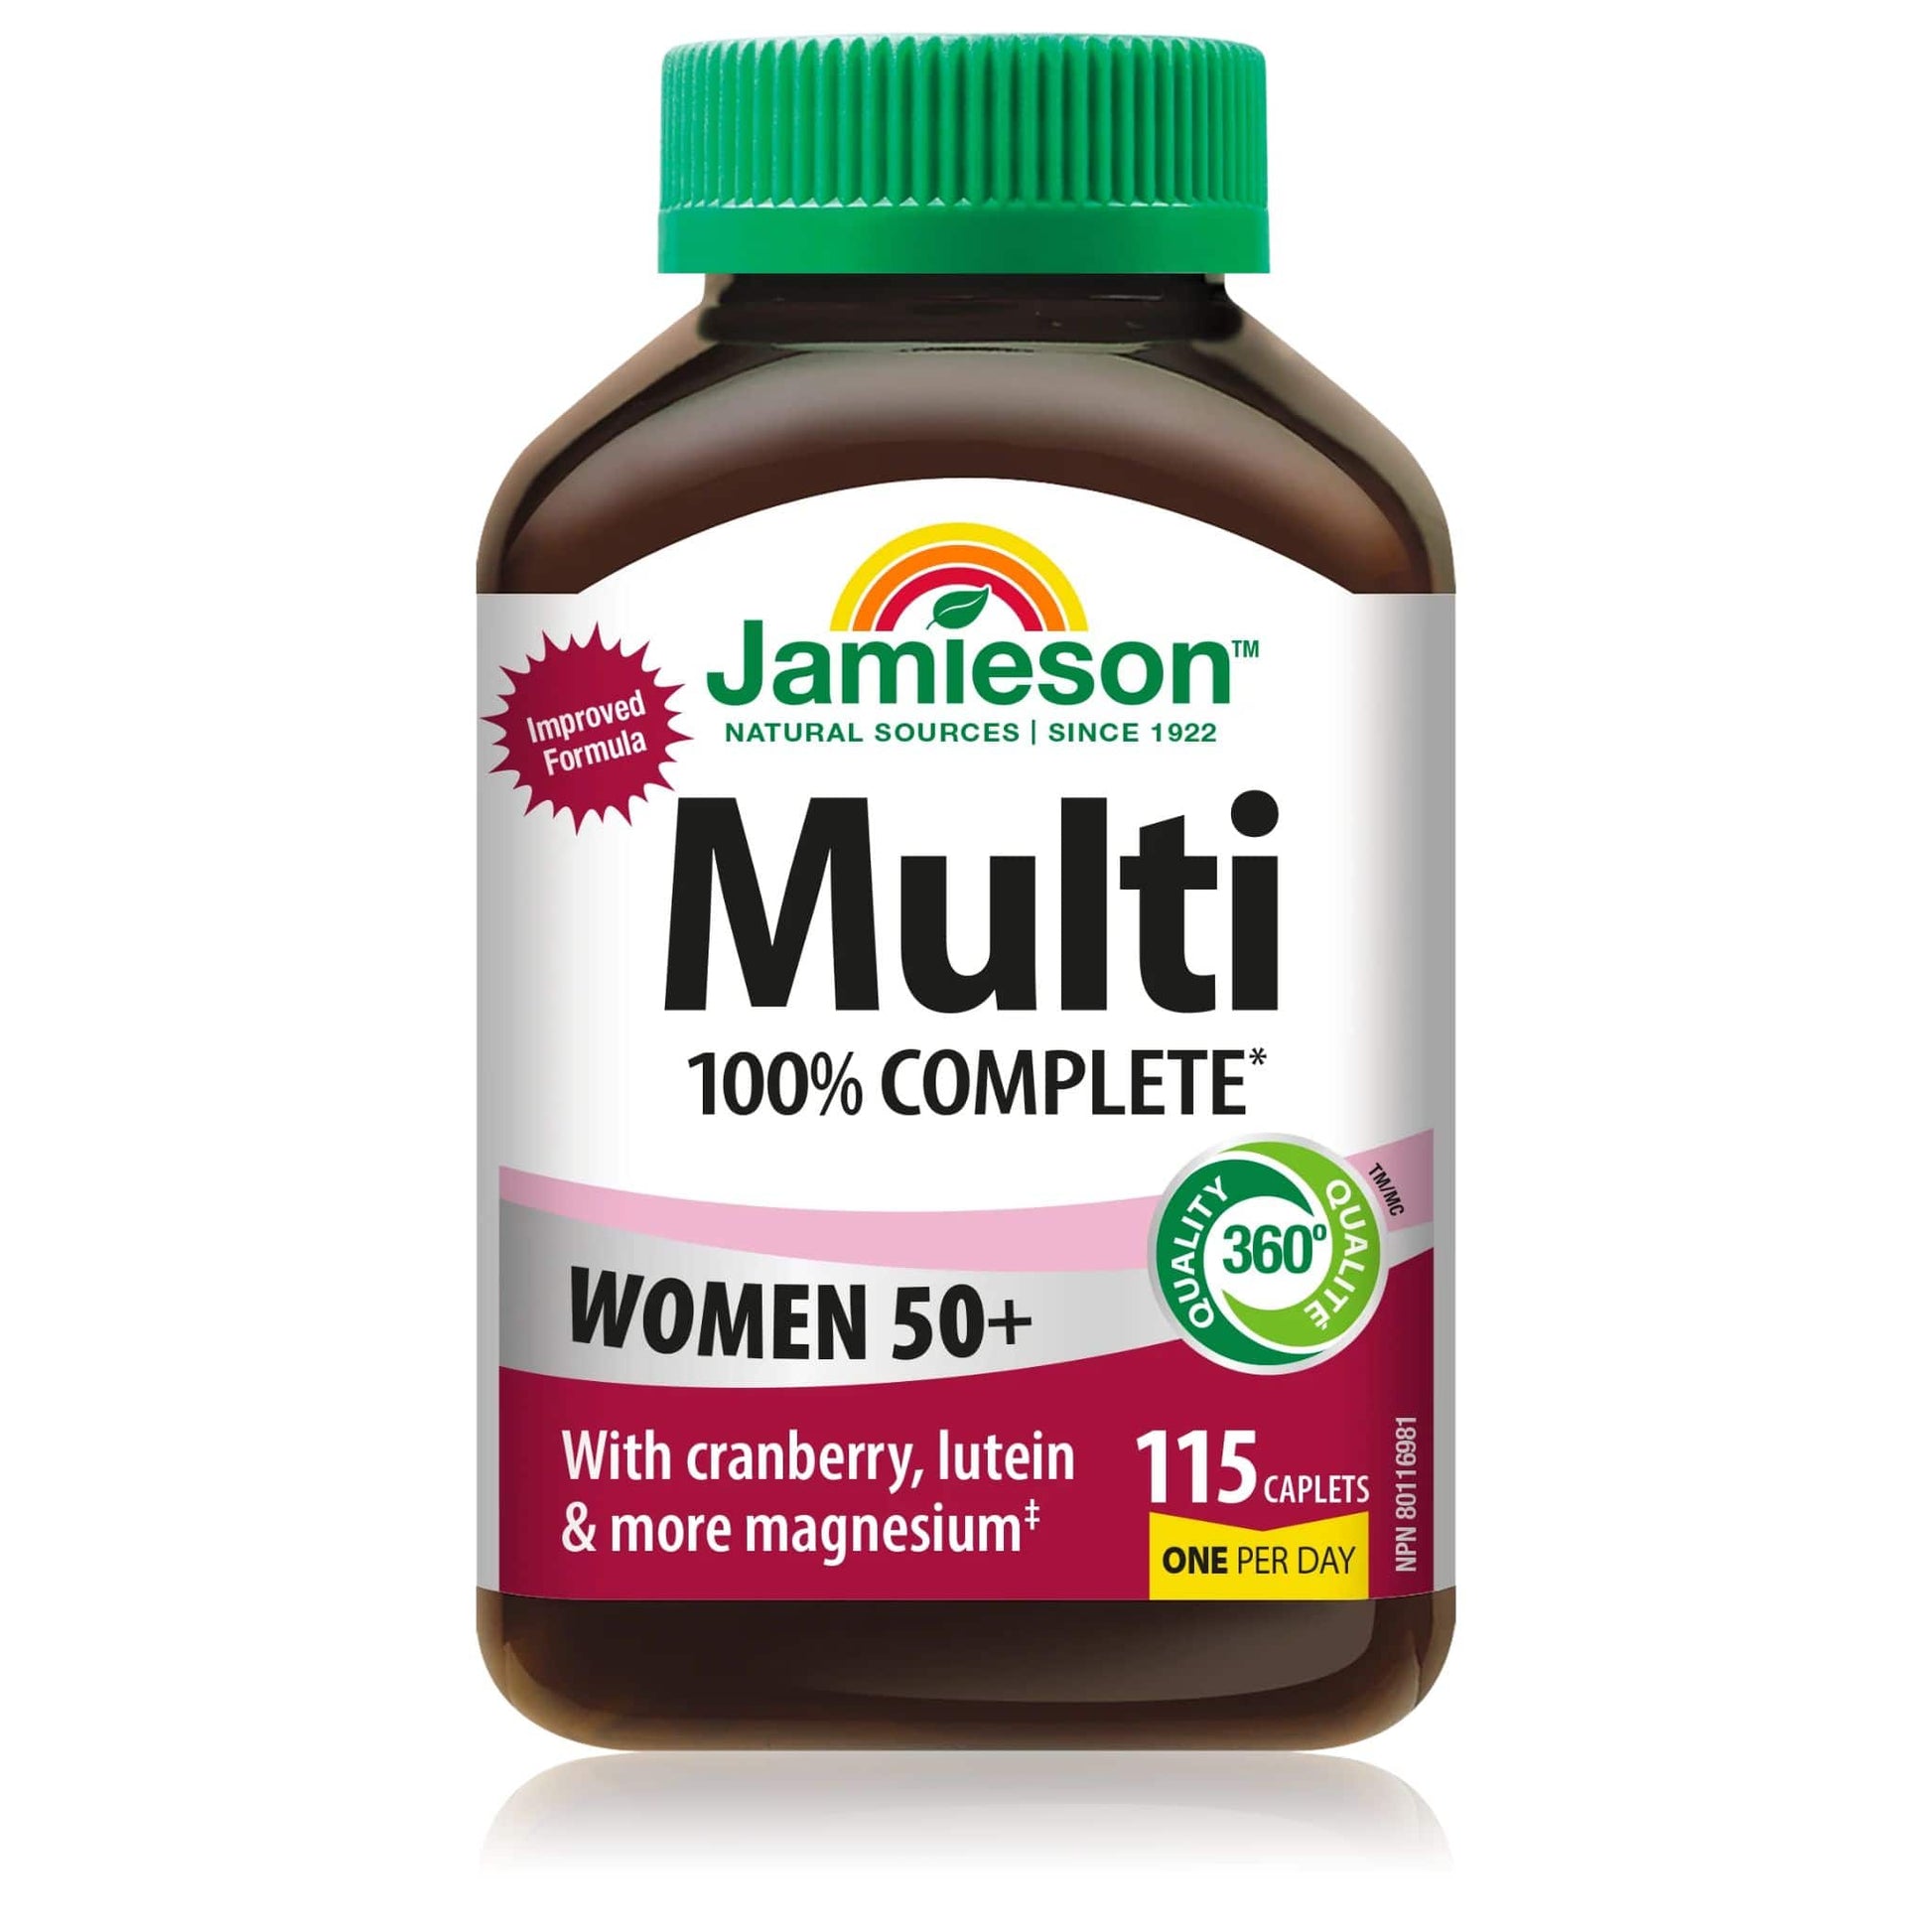 115 Caplets (New Formula) | Jamieson Multi 100% Complete Multivitamin for Women 50+